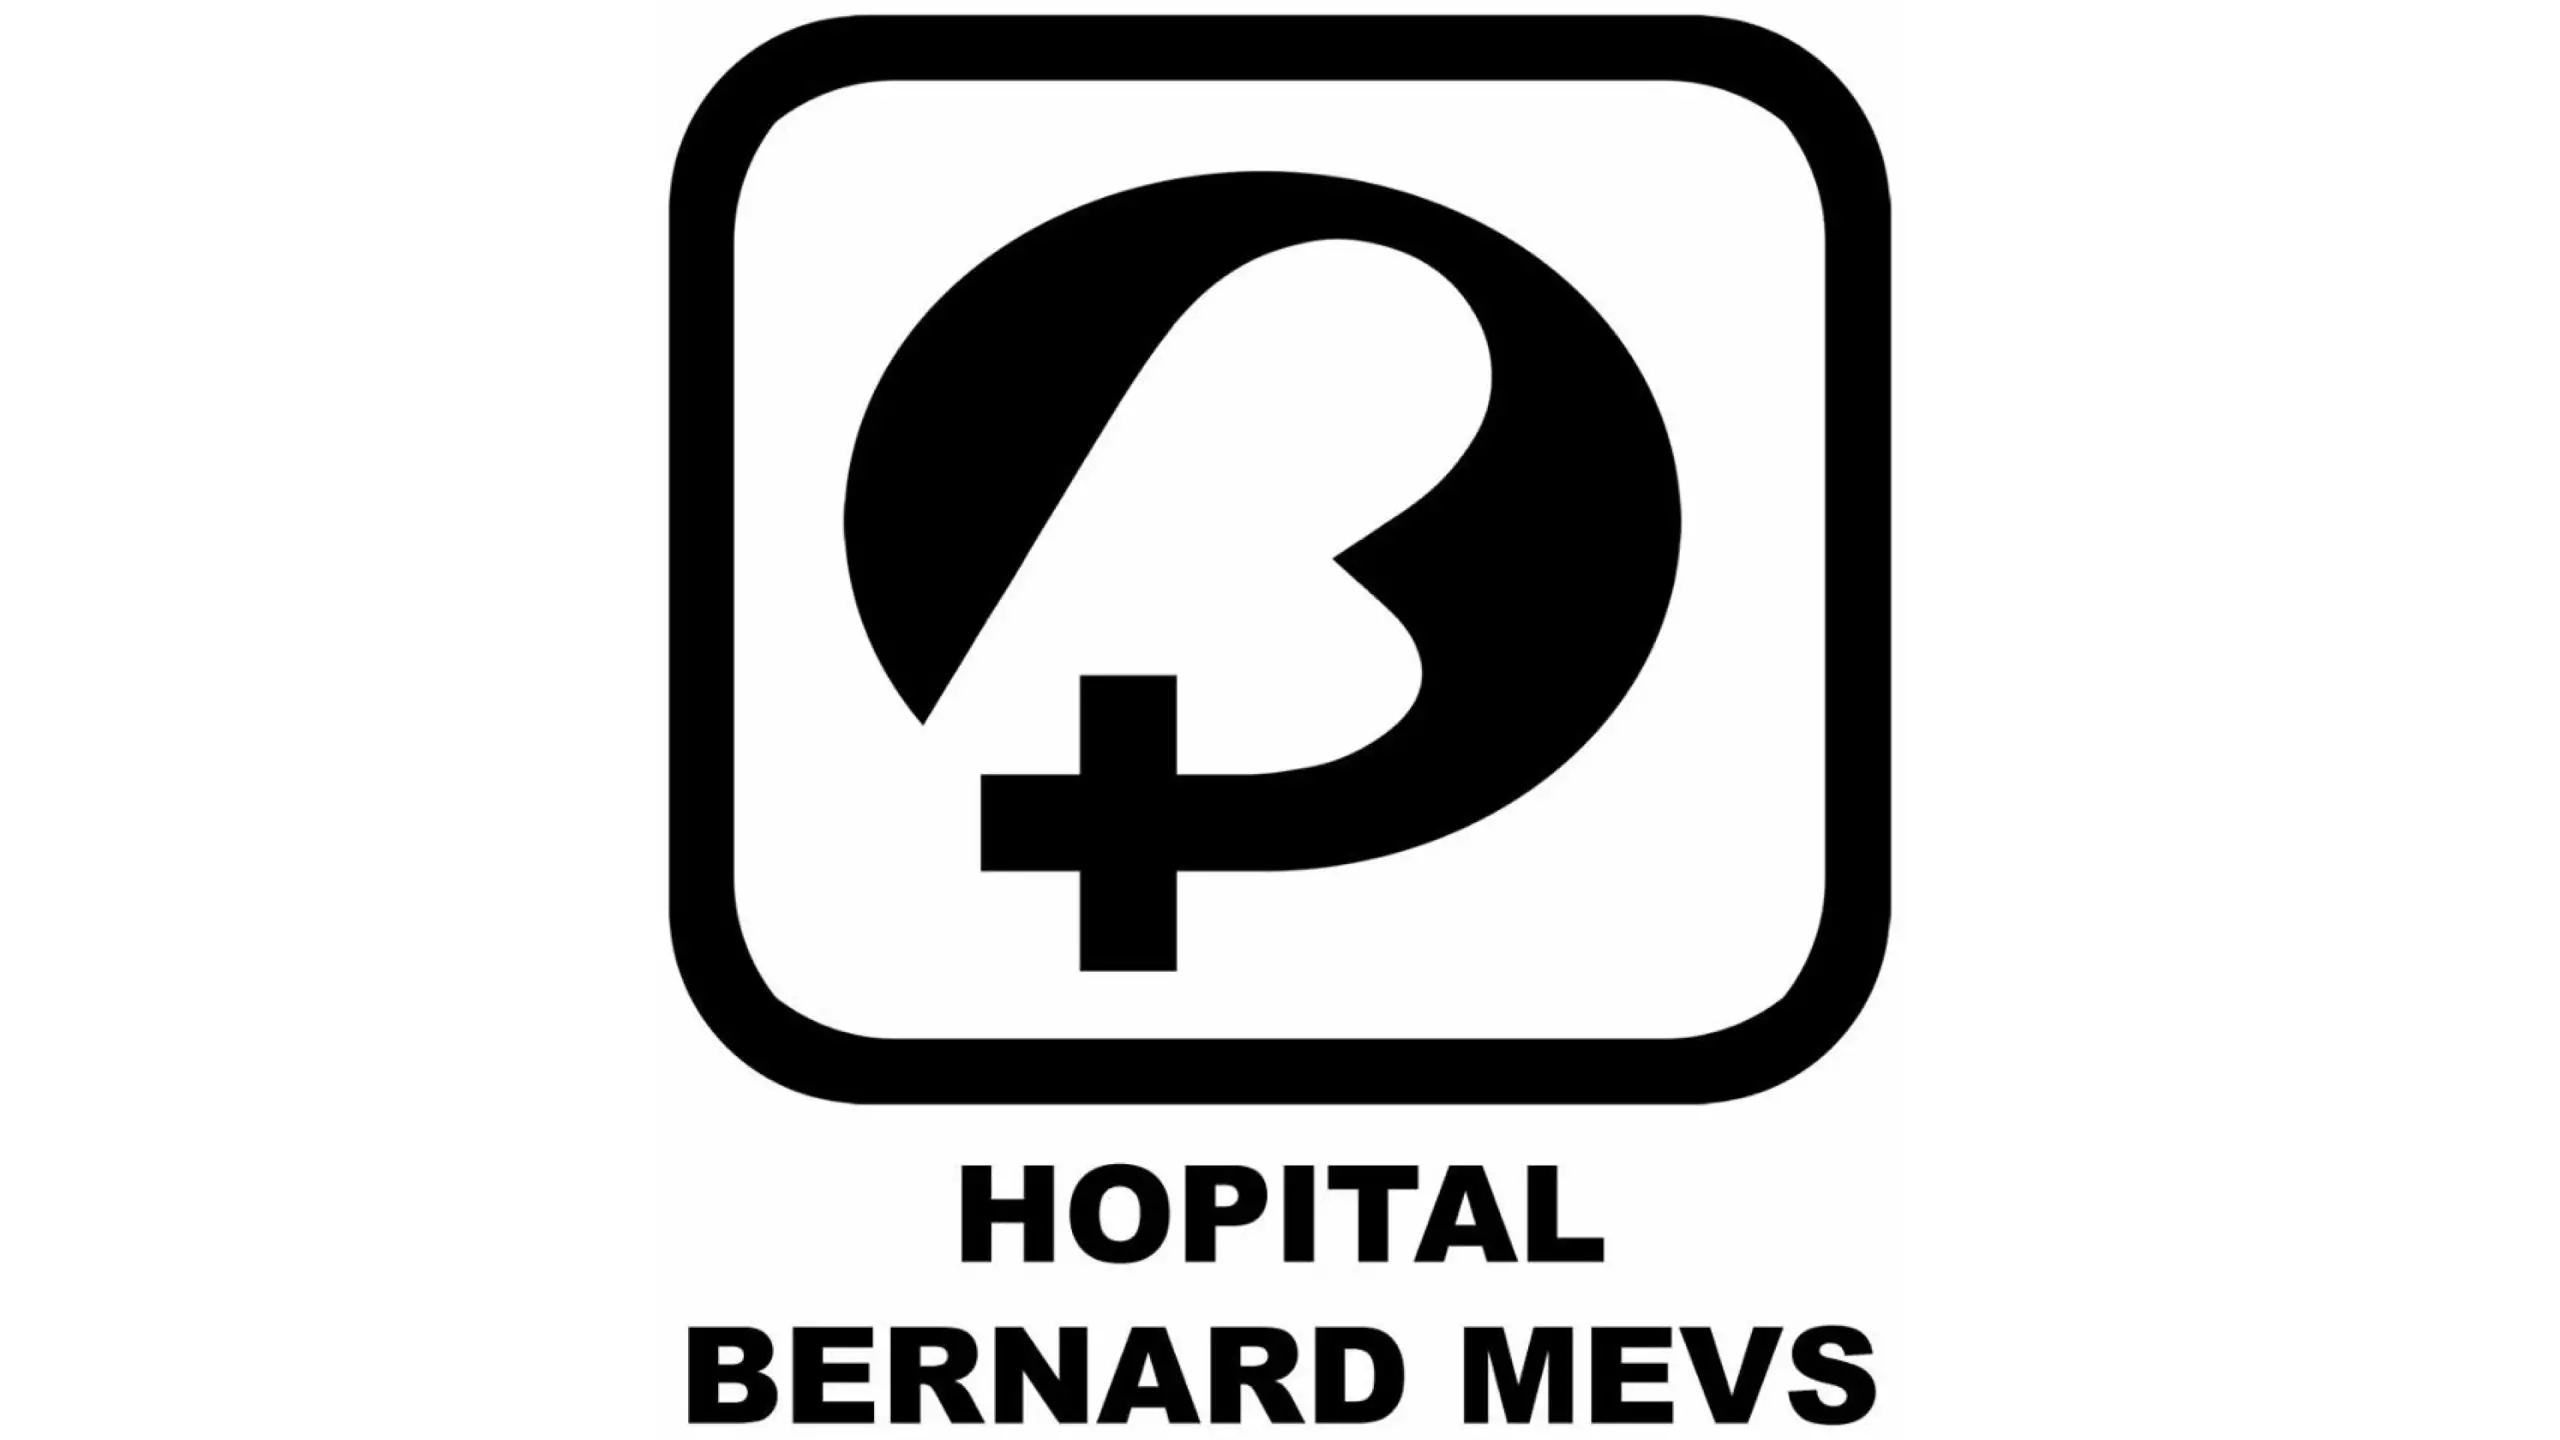 Hôpital Bernard Mevs